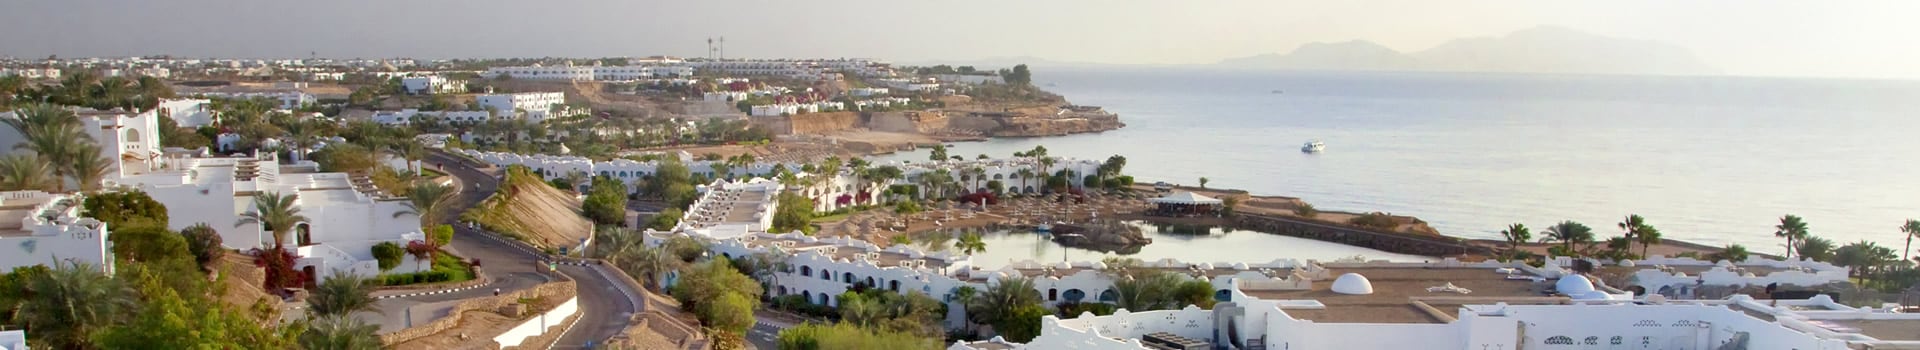 Alger - Sharm el sheikh - ophira